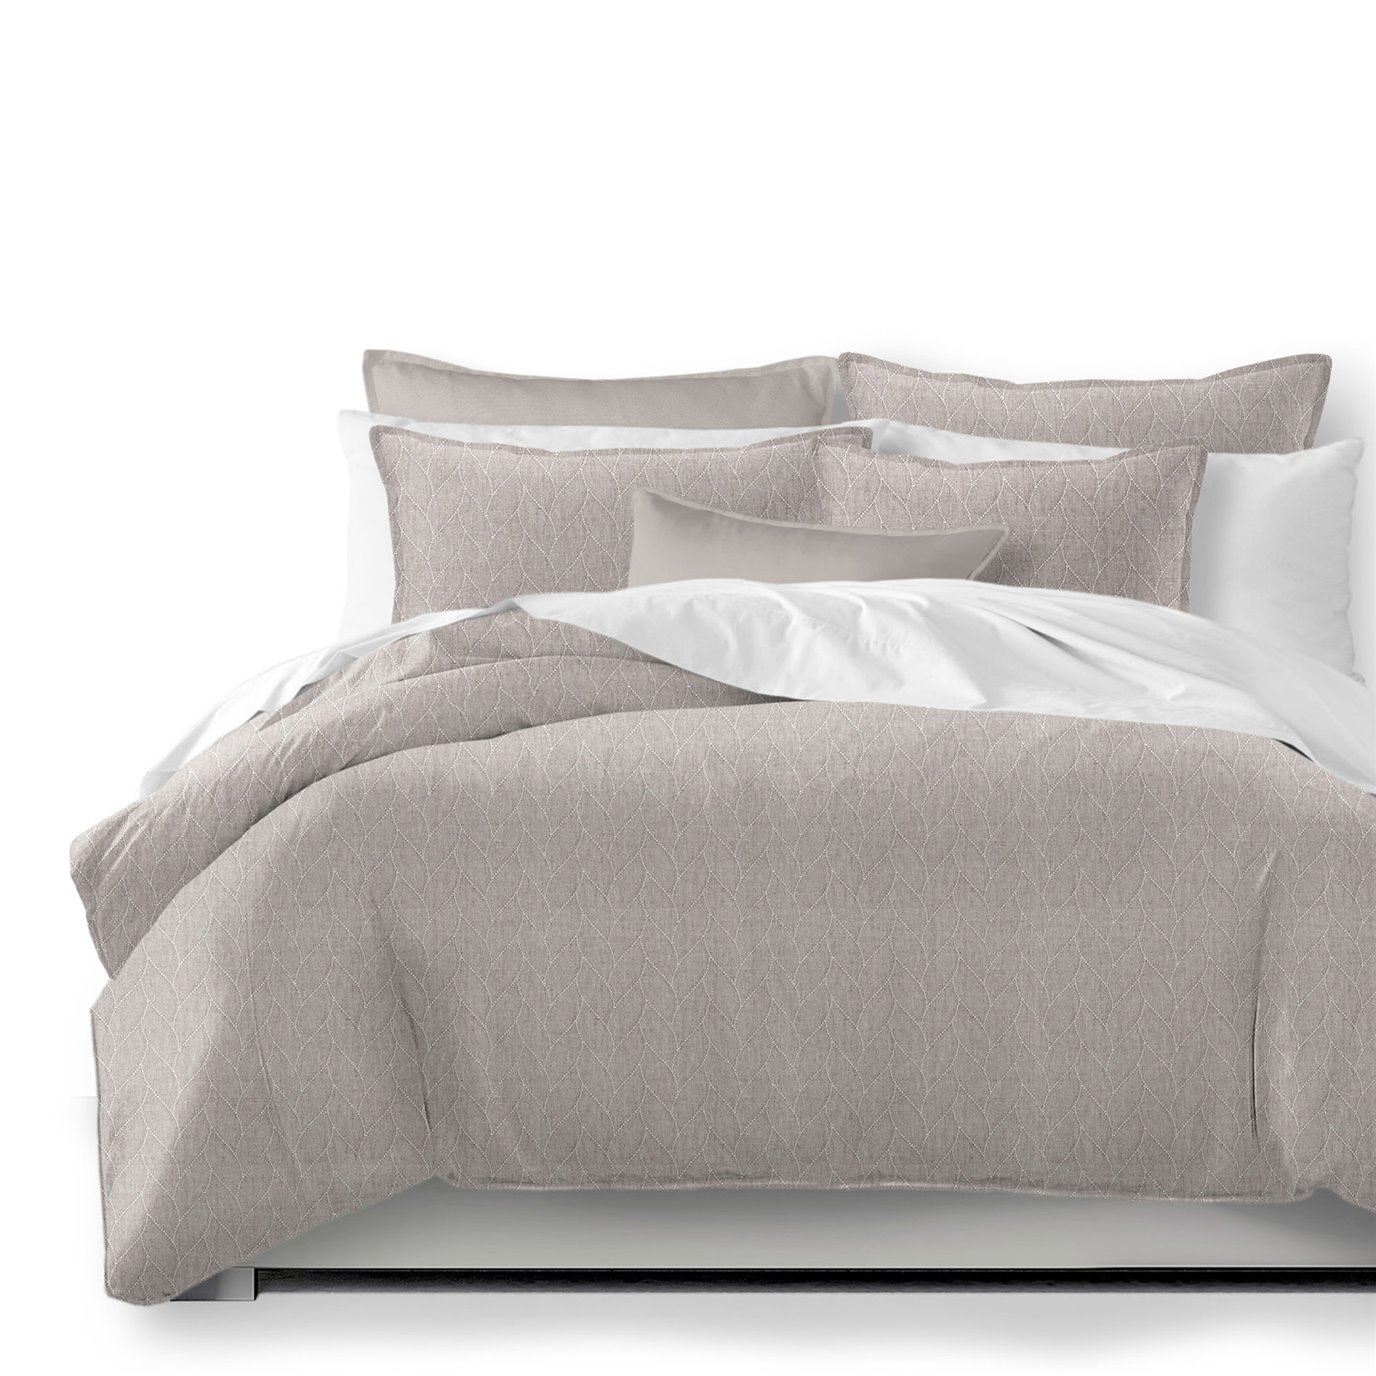 Zickwood Ecru Comforter and Pillow Sham(s) Set - Size Twin